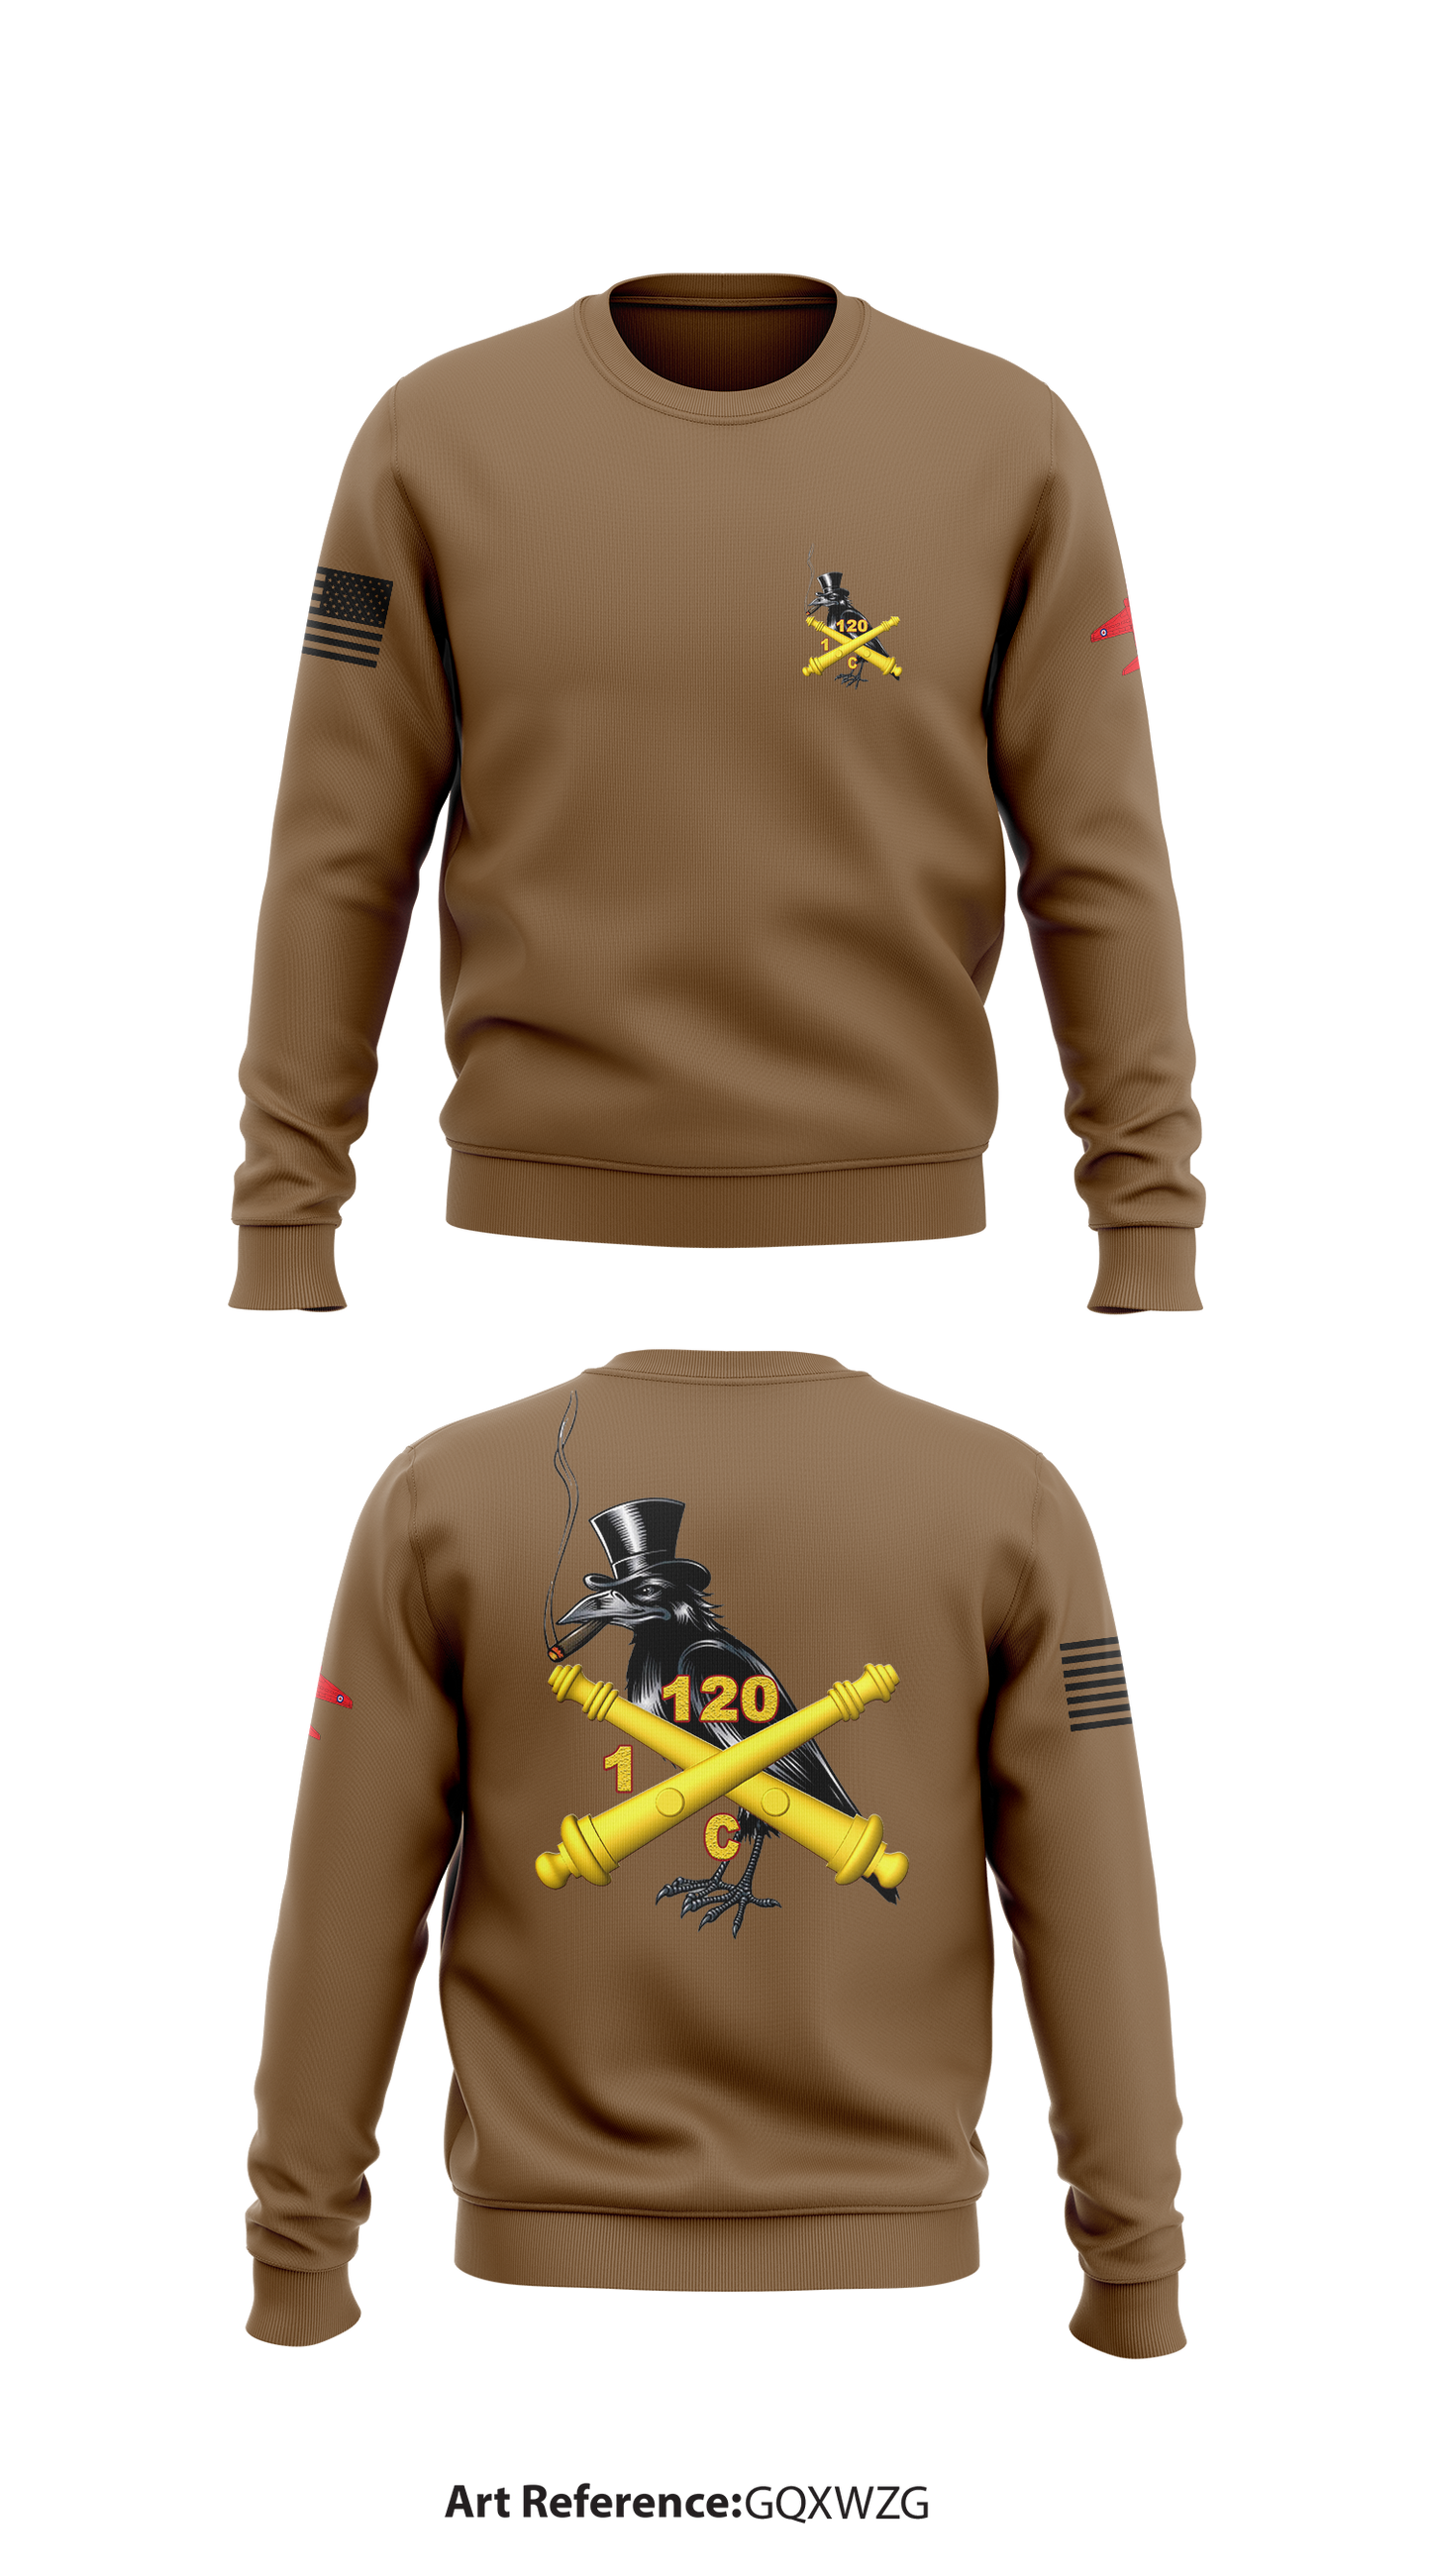 C BTRY 1-120th FA Store 1 Core Men's Crewneck Performance Sweatshirt - GQXWzG